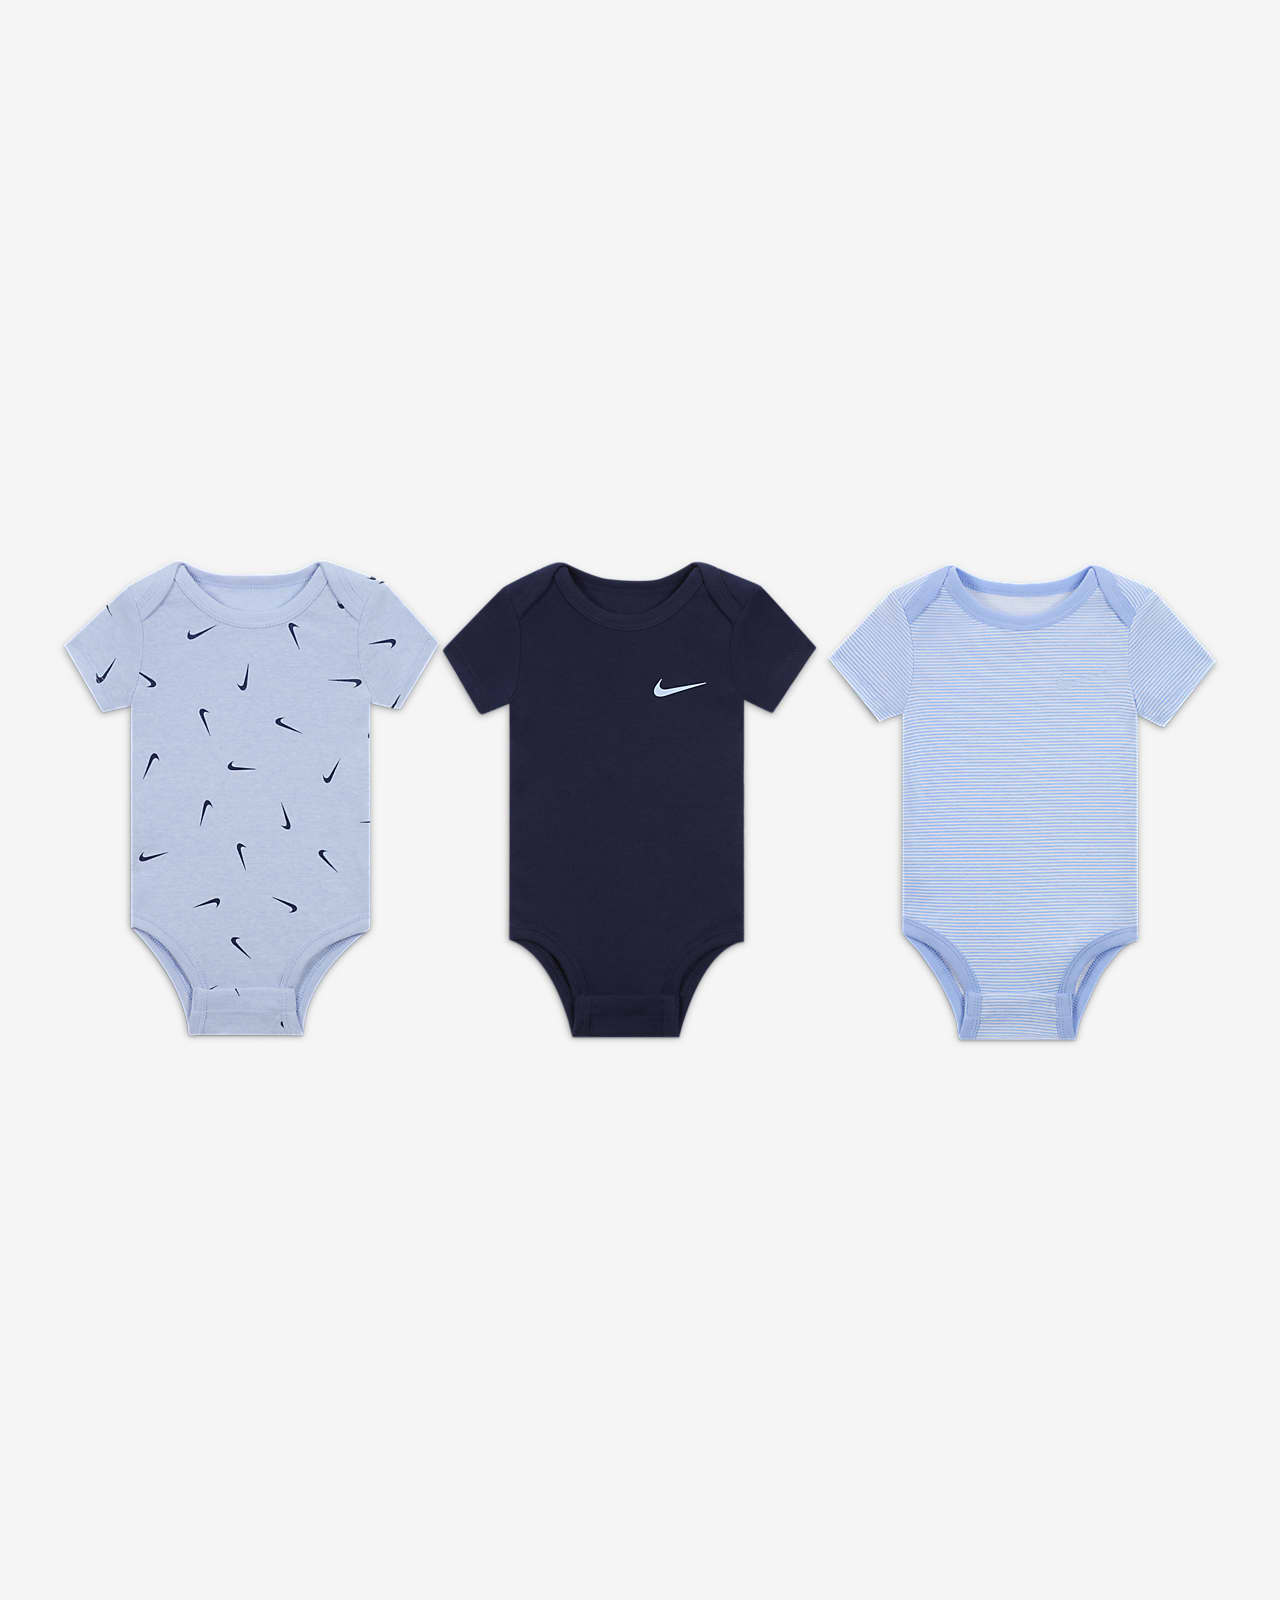 Body Nike Baby Essentials (confezione da 3) – Bebè (0-9 mesi)